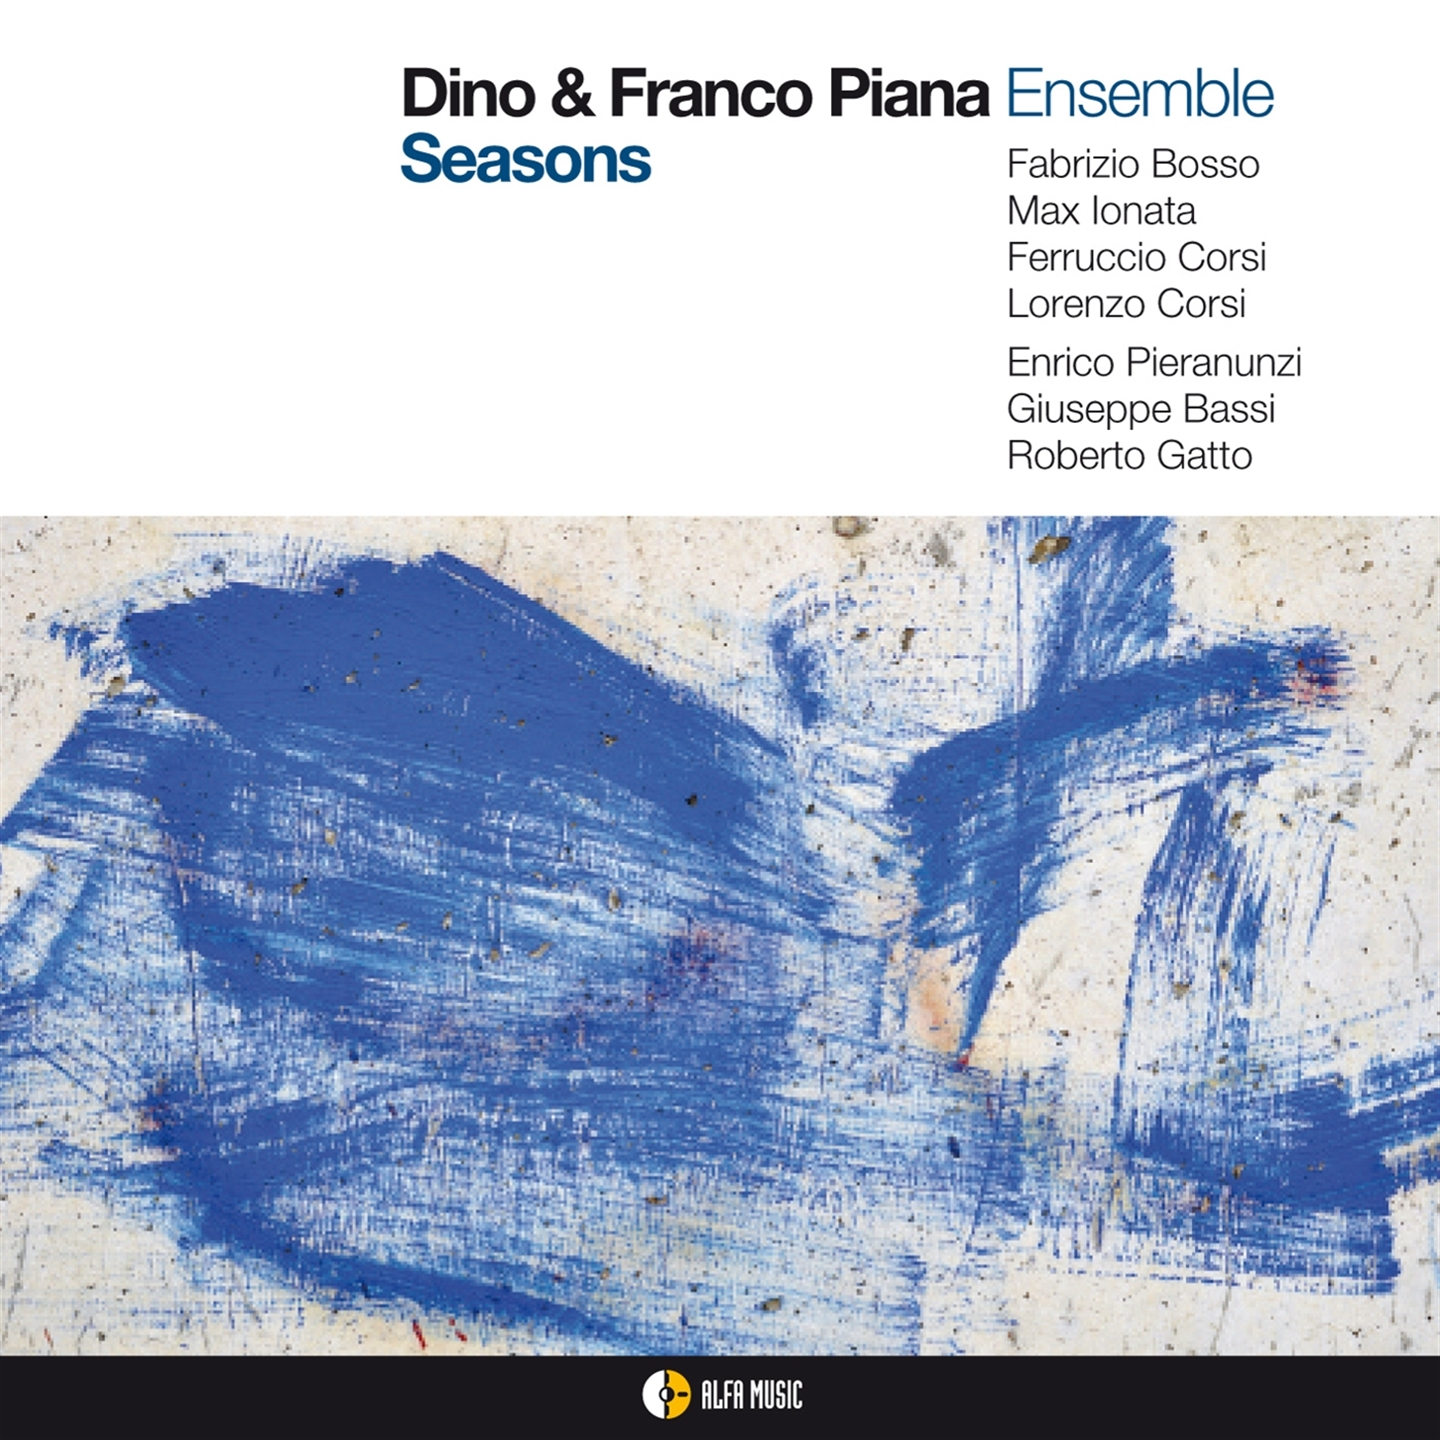 Dino & Franco Piana - Seasons - Foto 1 di 1